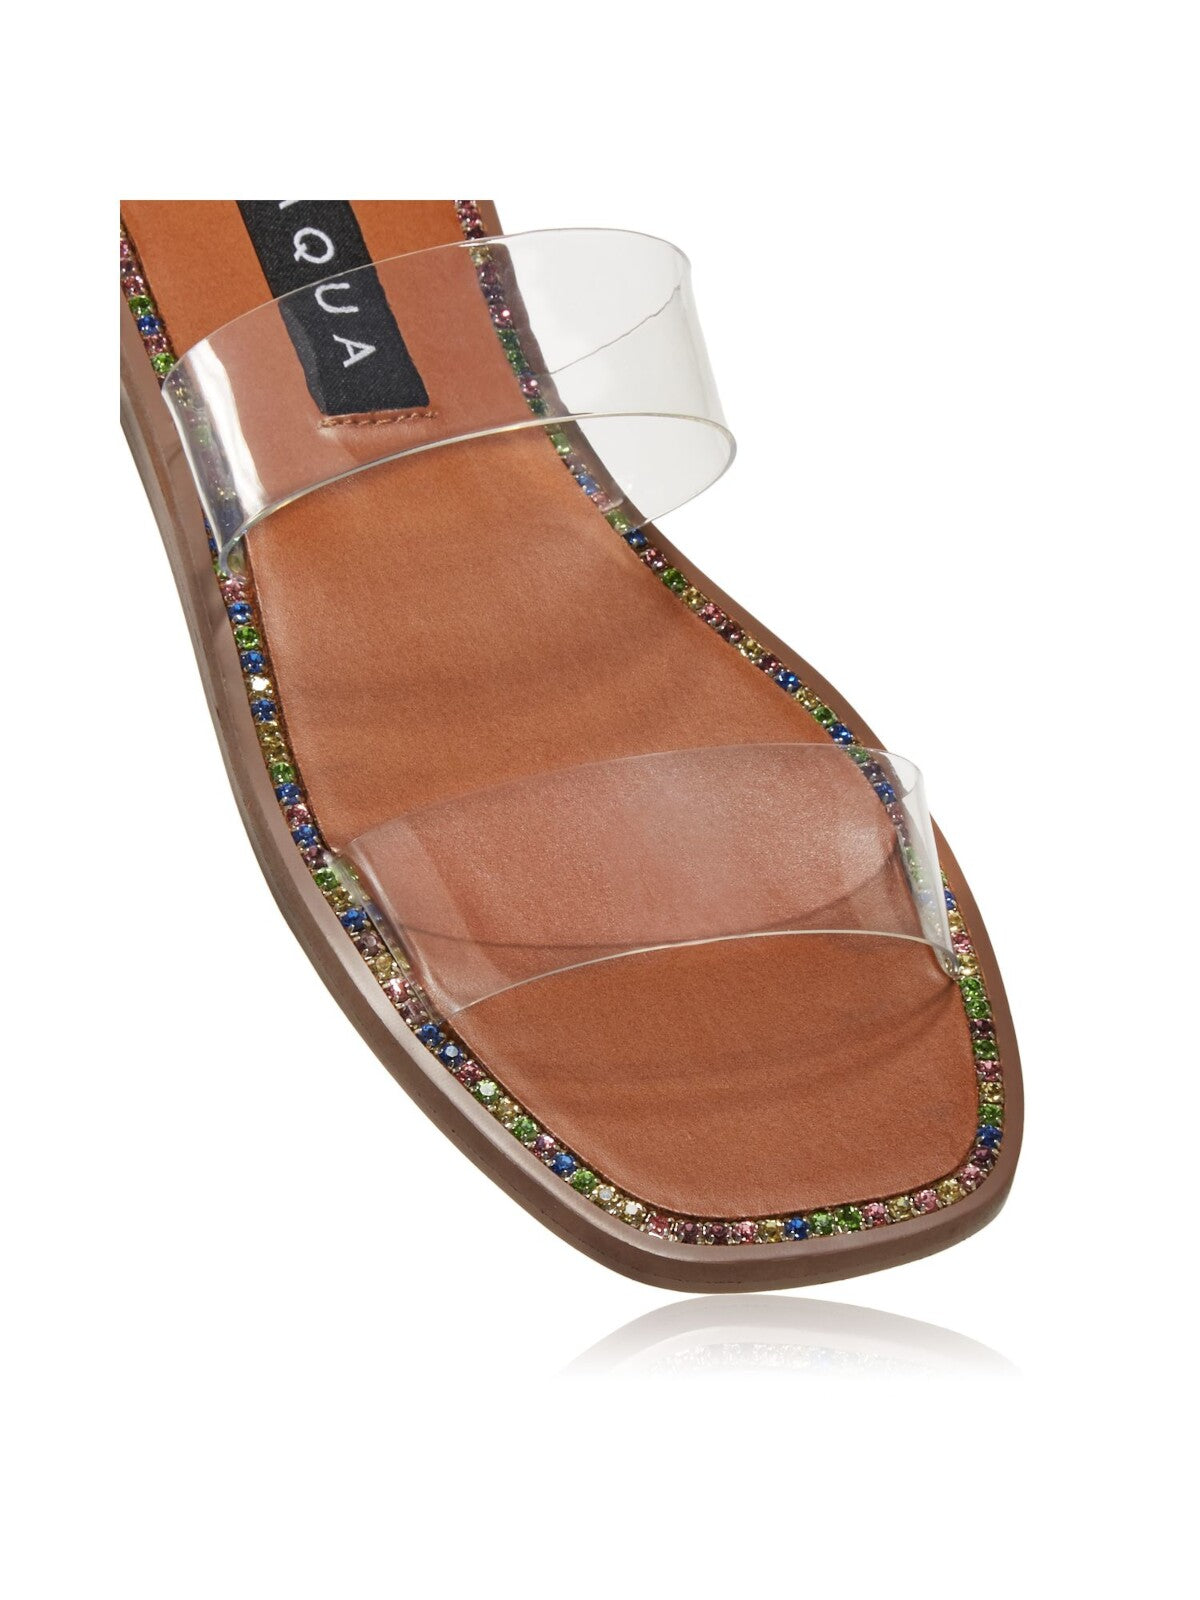 AQUA Womens Beige Studded Strappy Rhinestone Glow Square Toe Slip On Slide Sandals Shoes 6.5 M